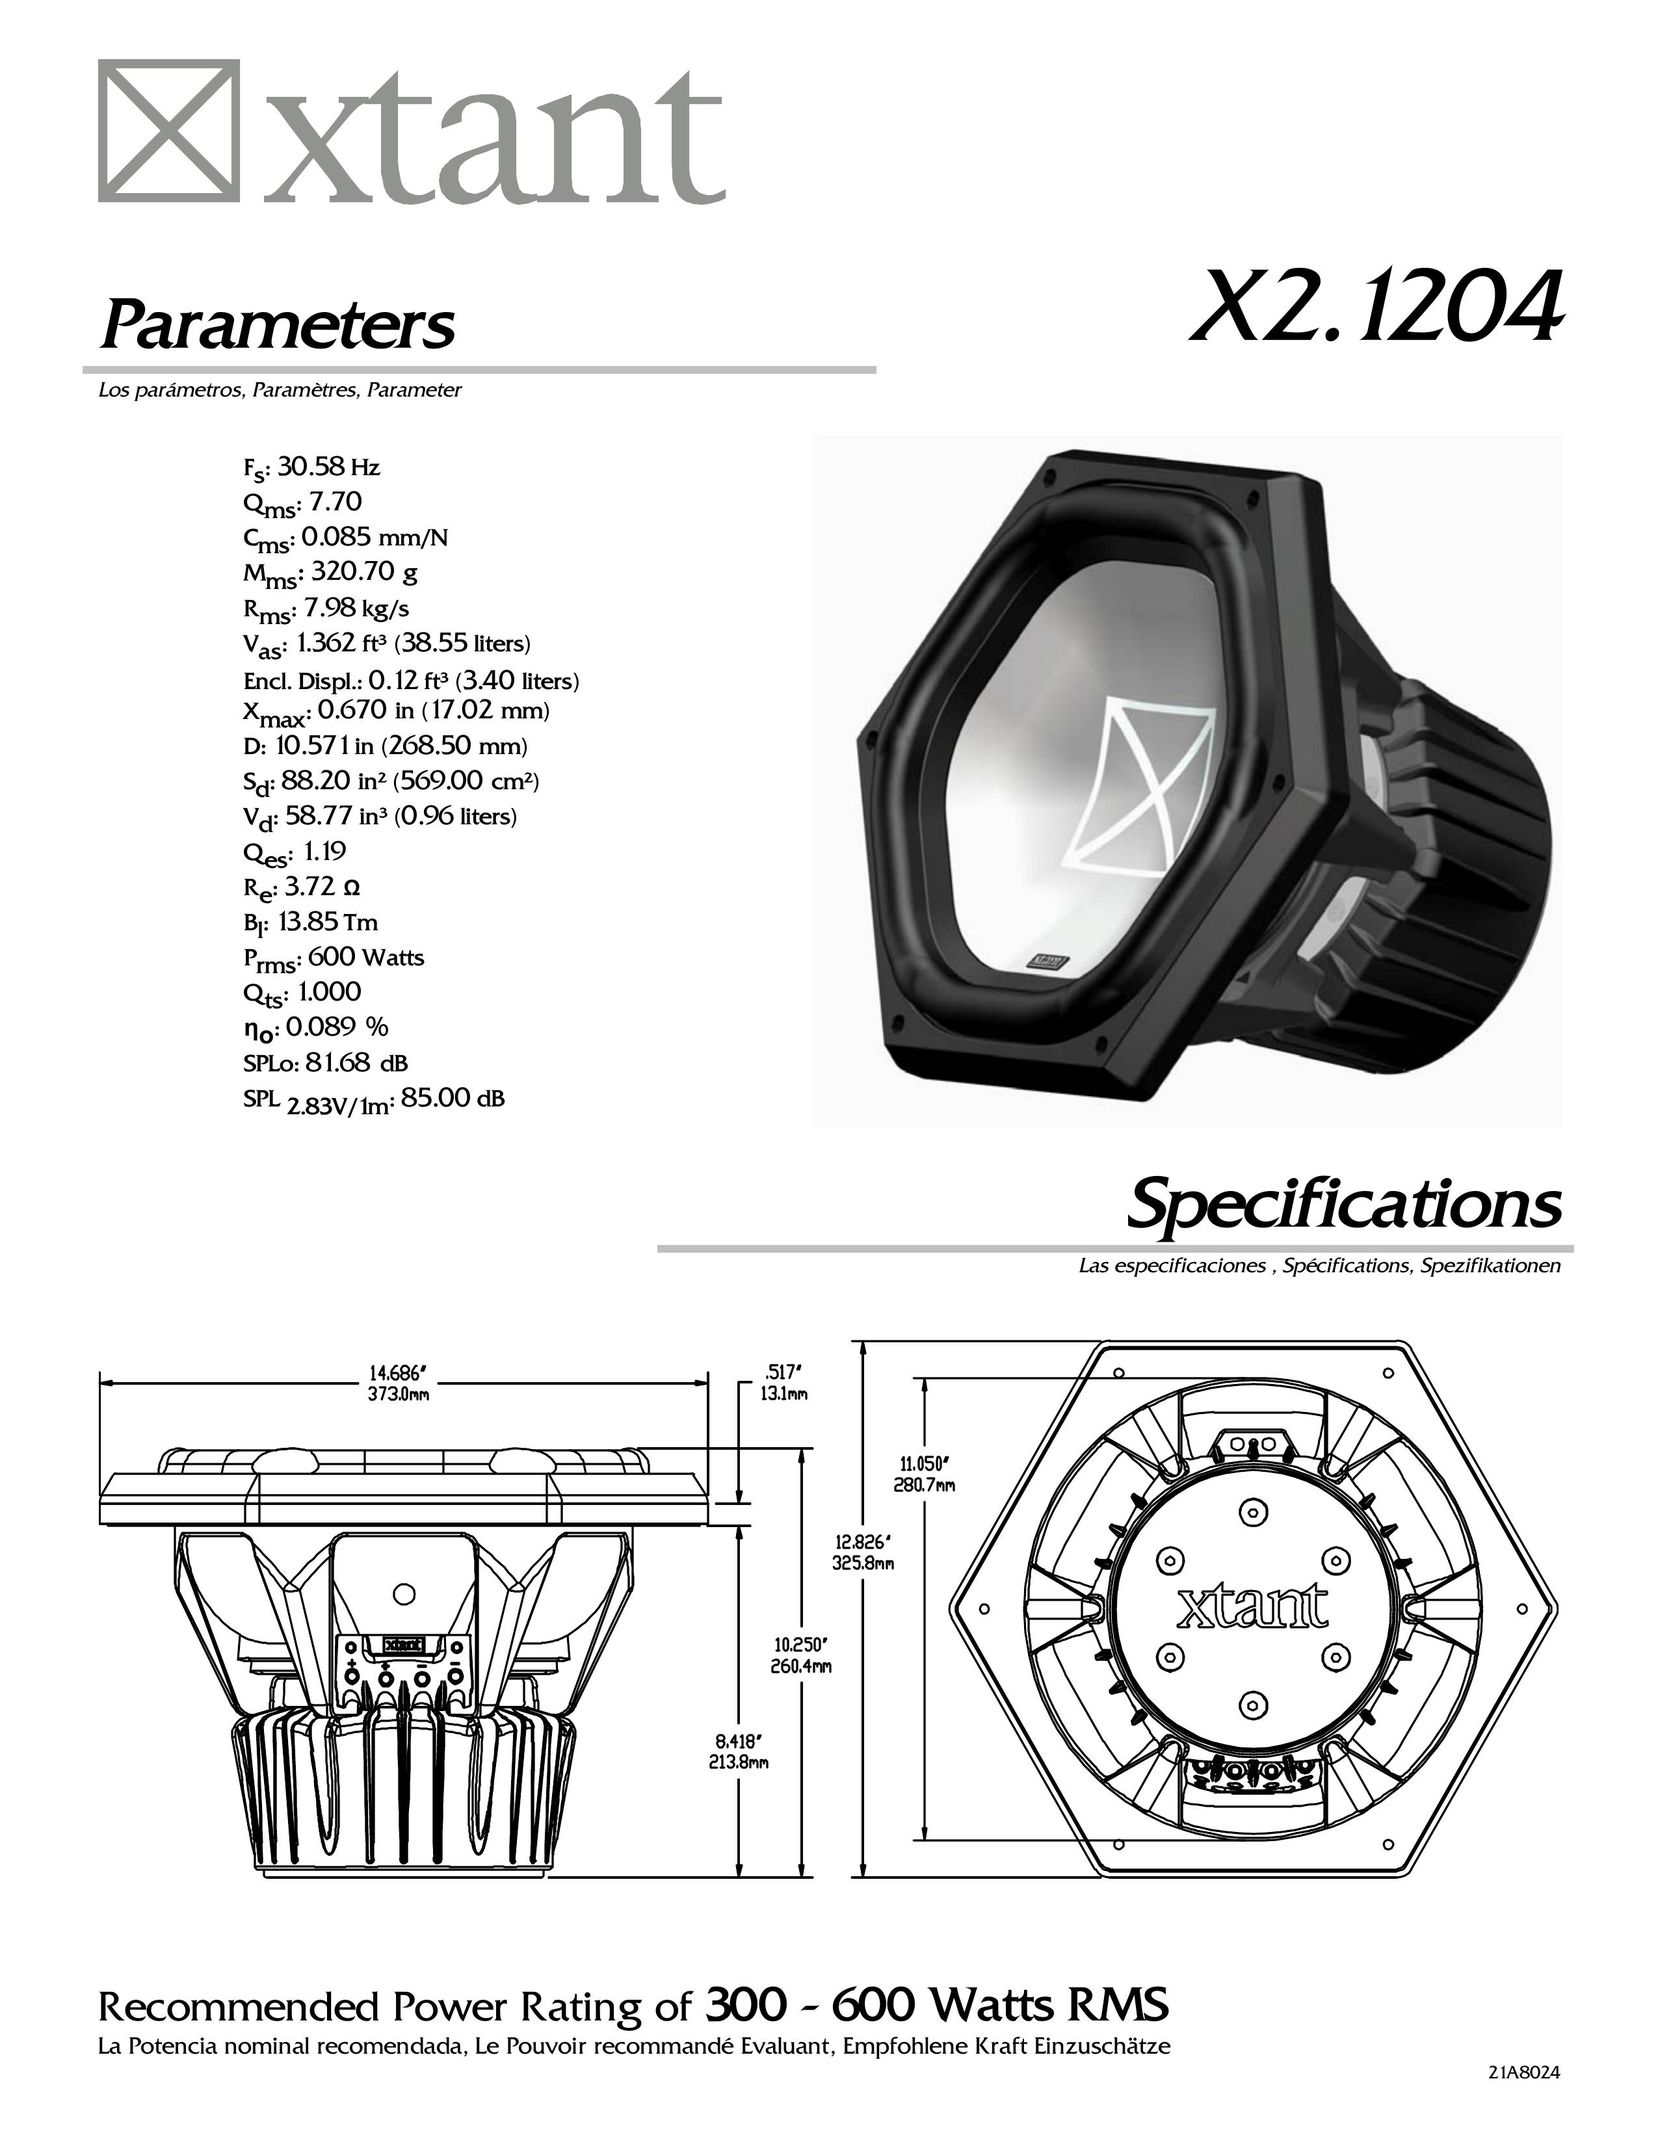 Xtant X2.1204 Work Light User Manual